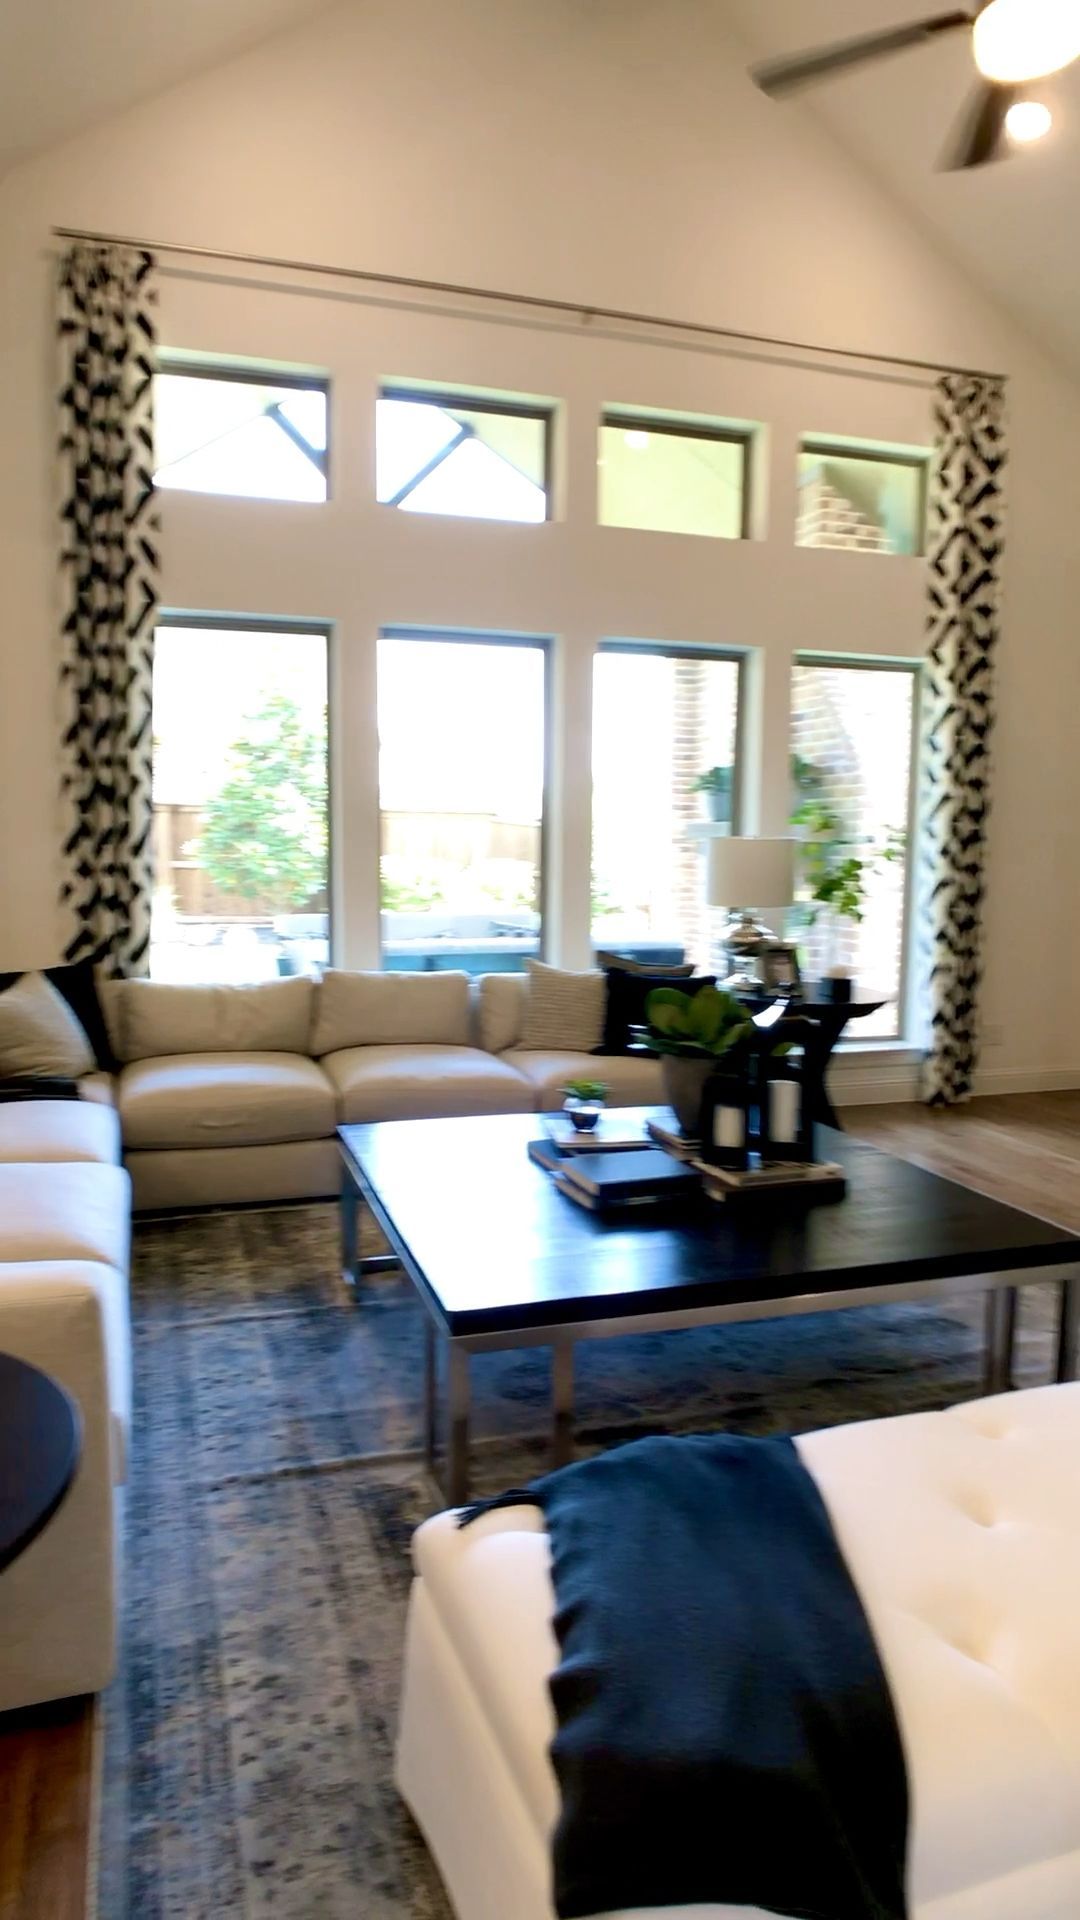 Open Floorplan Living Room and Kitchen -   24 room decor Videos livingroom ideas